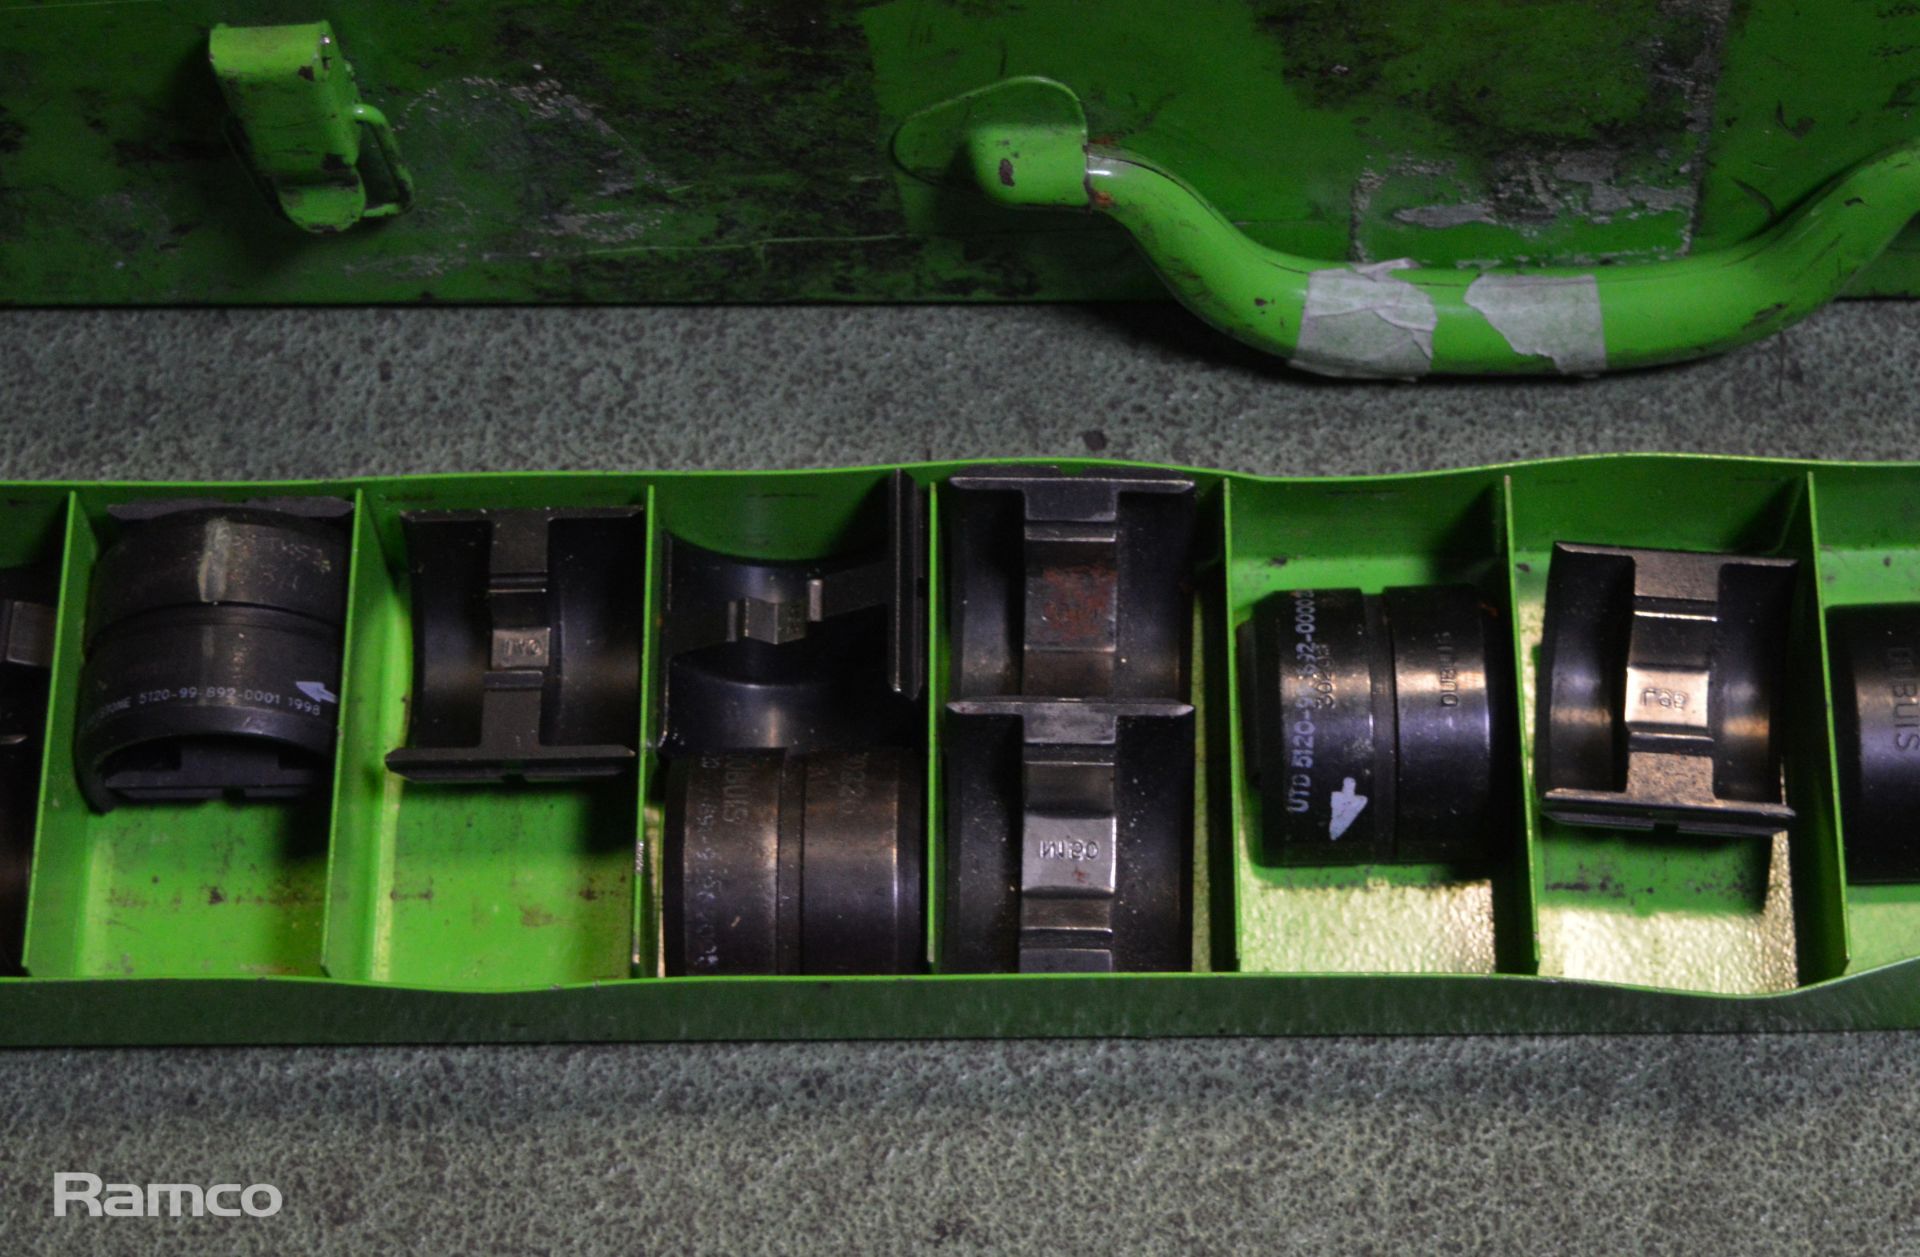 MIles Roystone hydraulic crimping kit - NSN 5180-99-130-0399 - Image 3 of 5